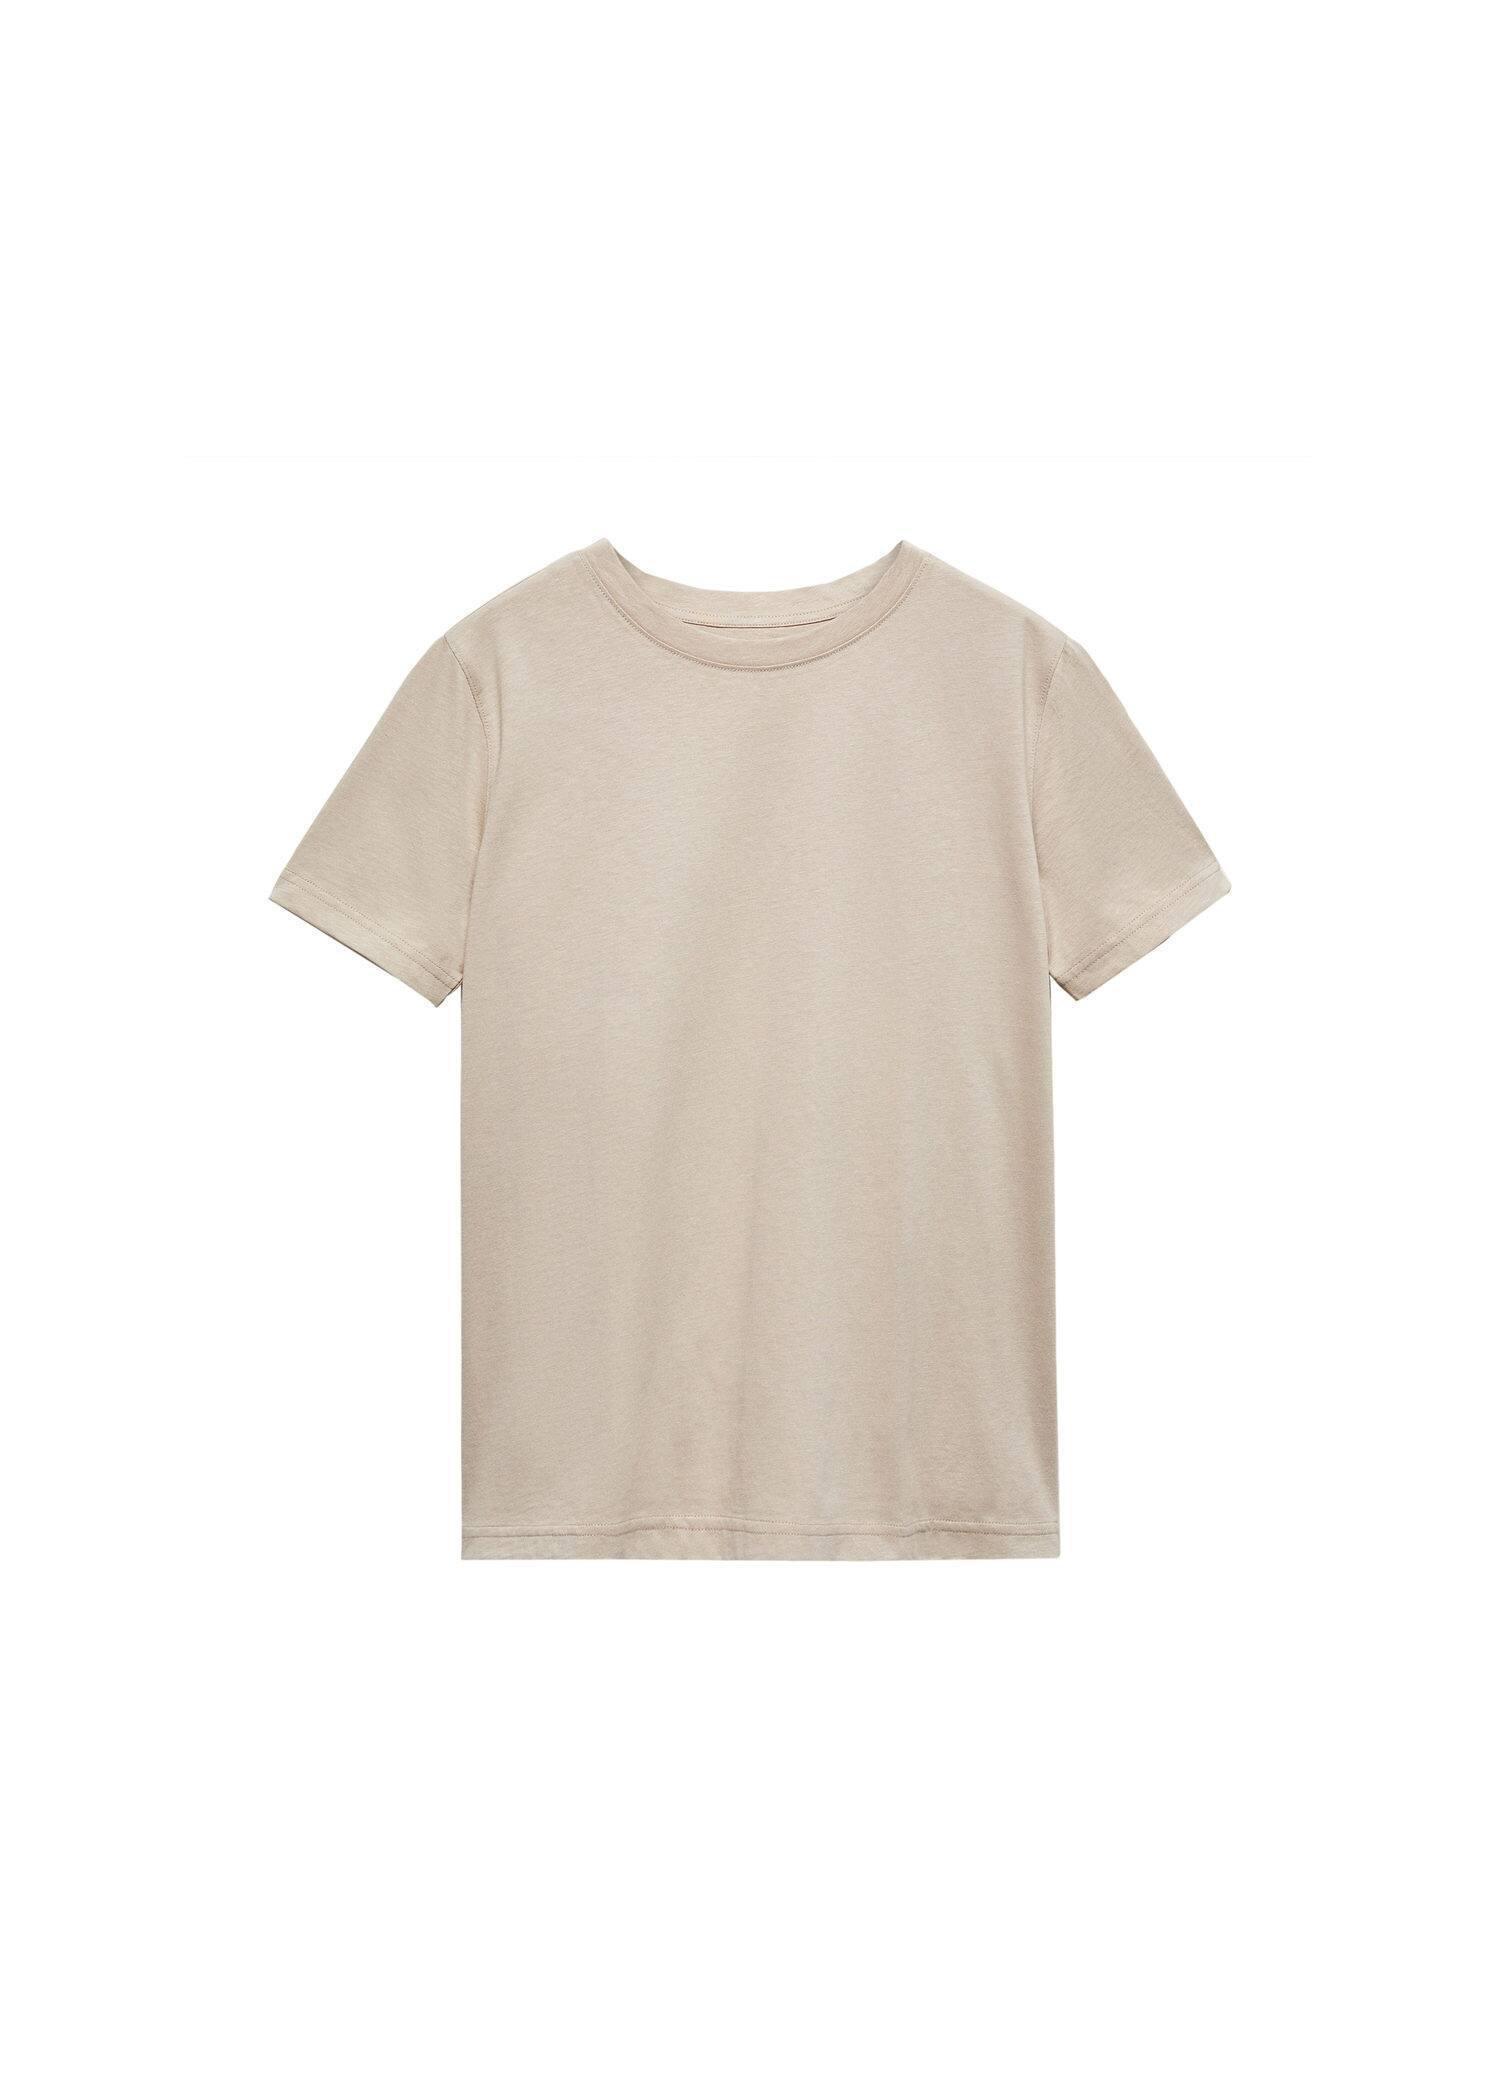 Mango - Beige Cotton T-Shirt